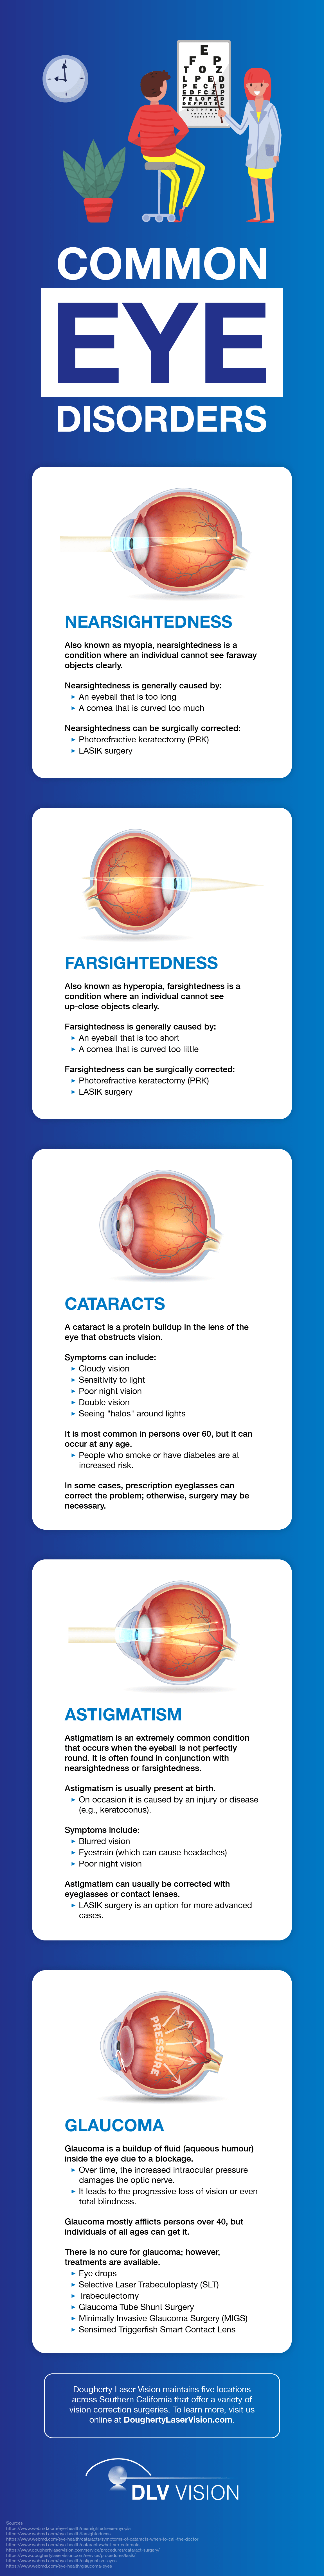 Common eye disorders infographic